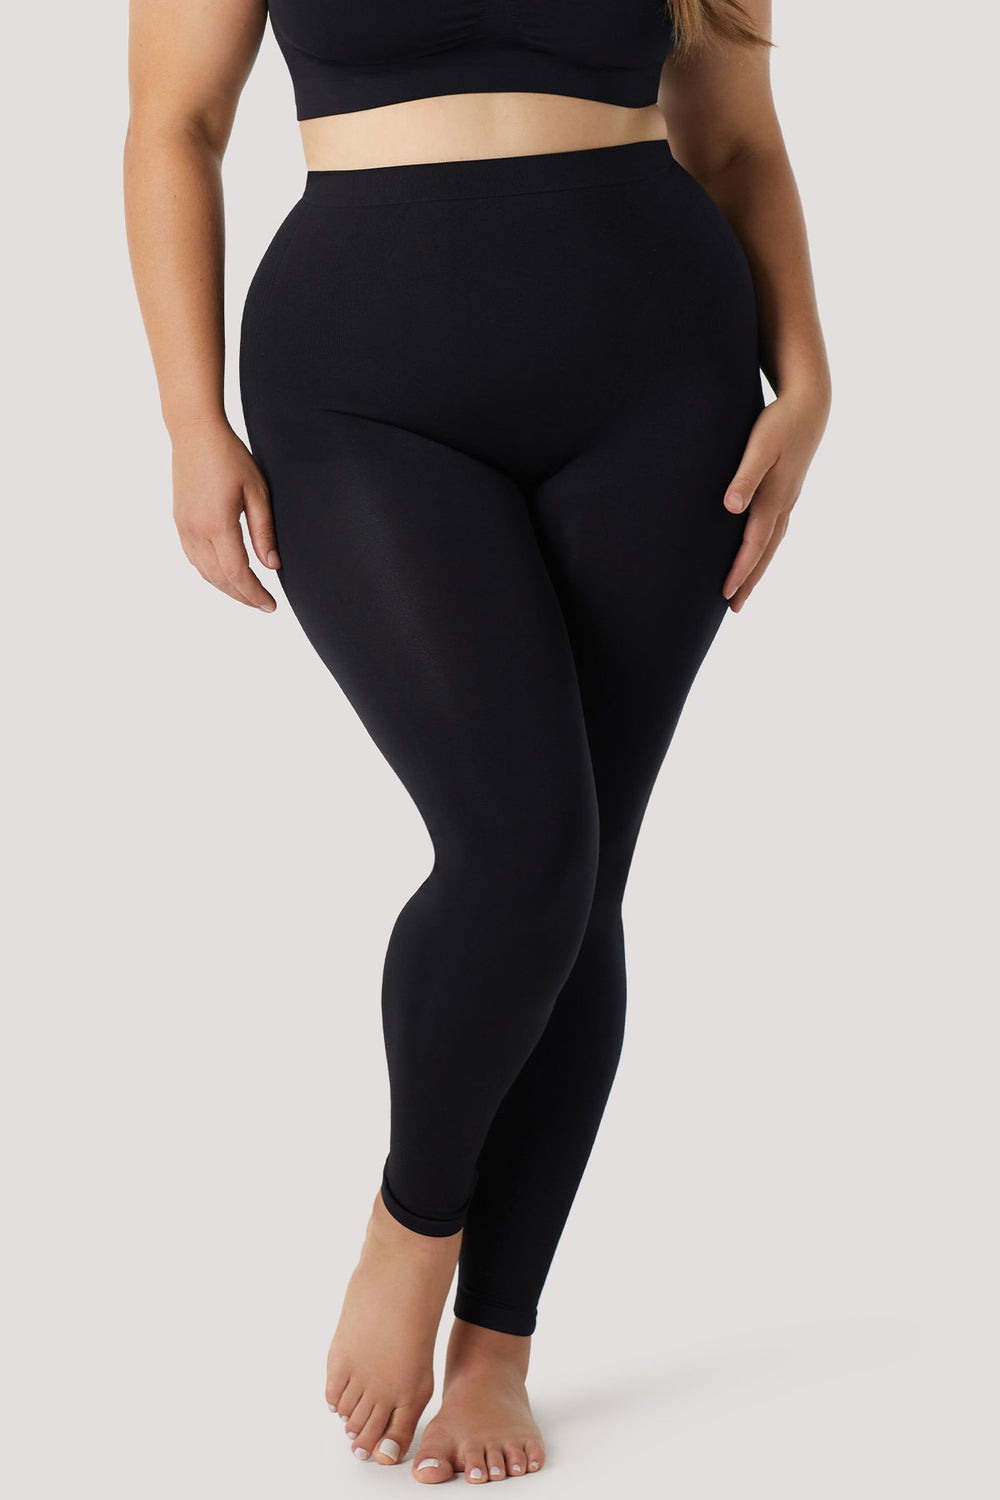 Lattice Mesh 7/8 Length High Waisted leggings - Womens Activewear, Shapewear,  Swimwear, Beachwear Online Australia